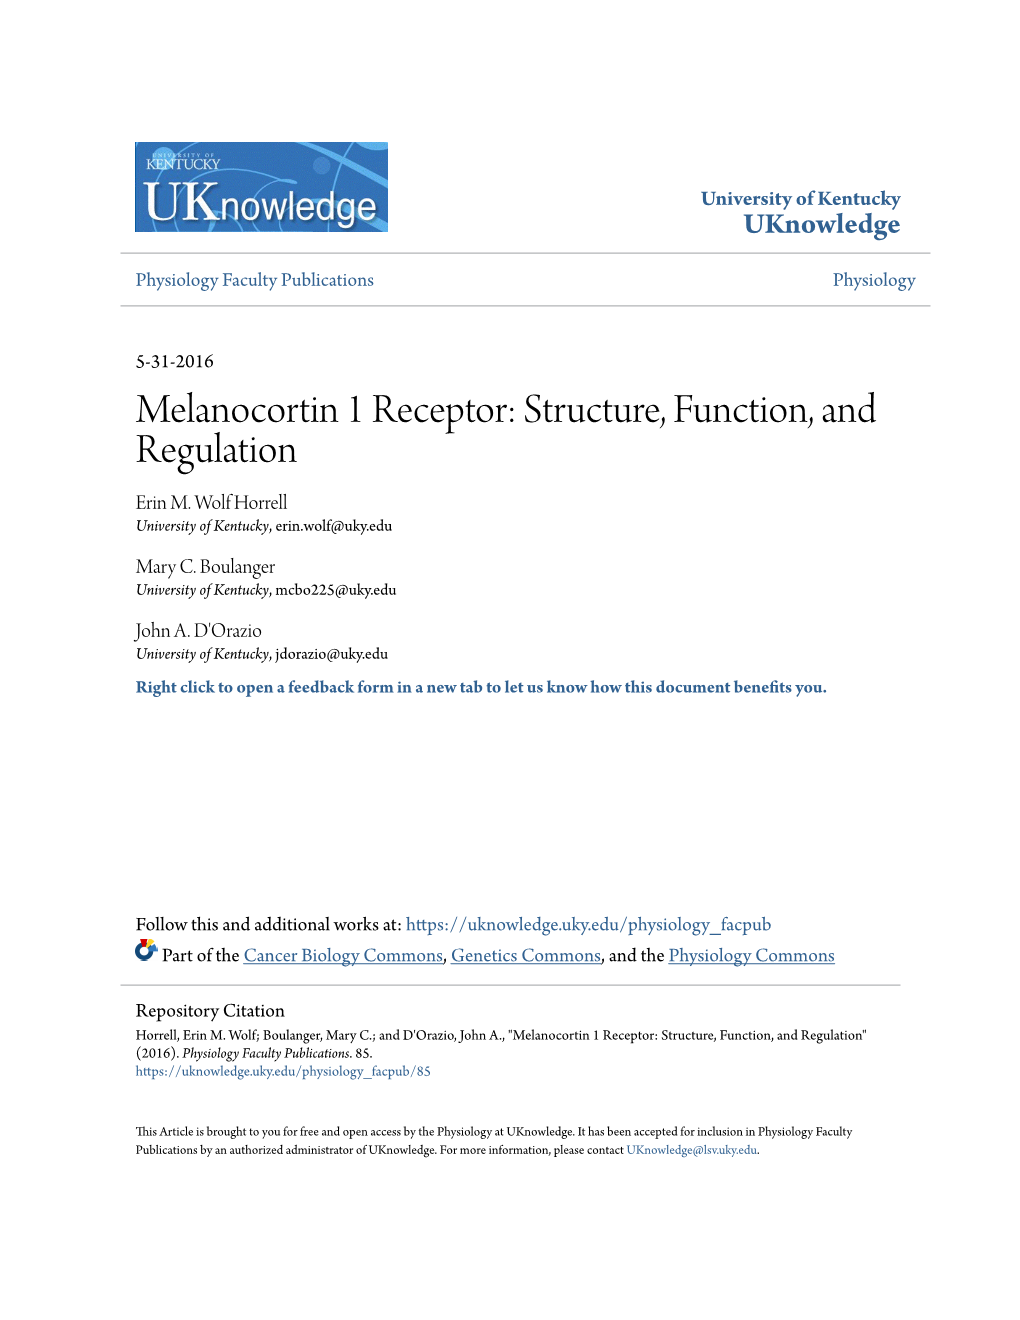 Melanocortin 1 Receptor: Structure, Function, and Regulation Erin M